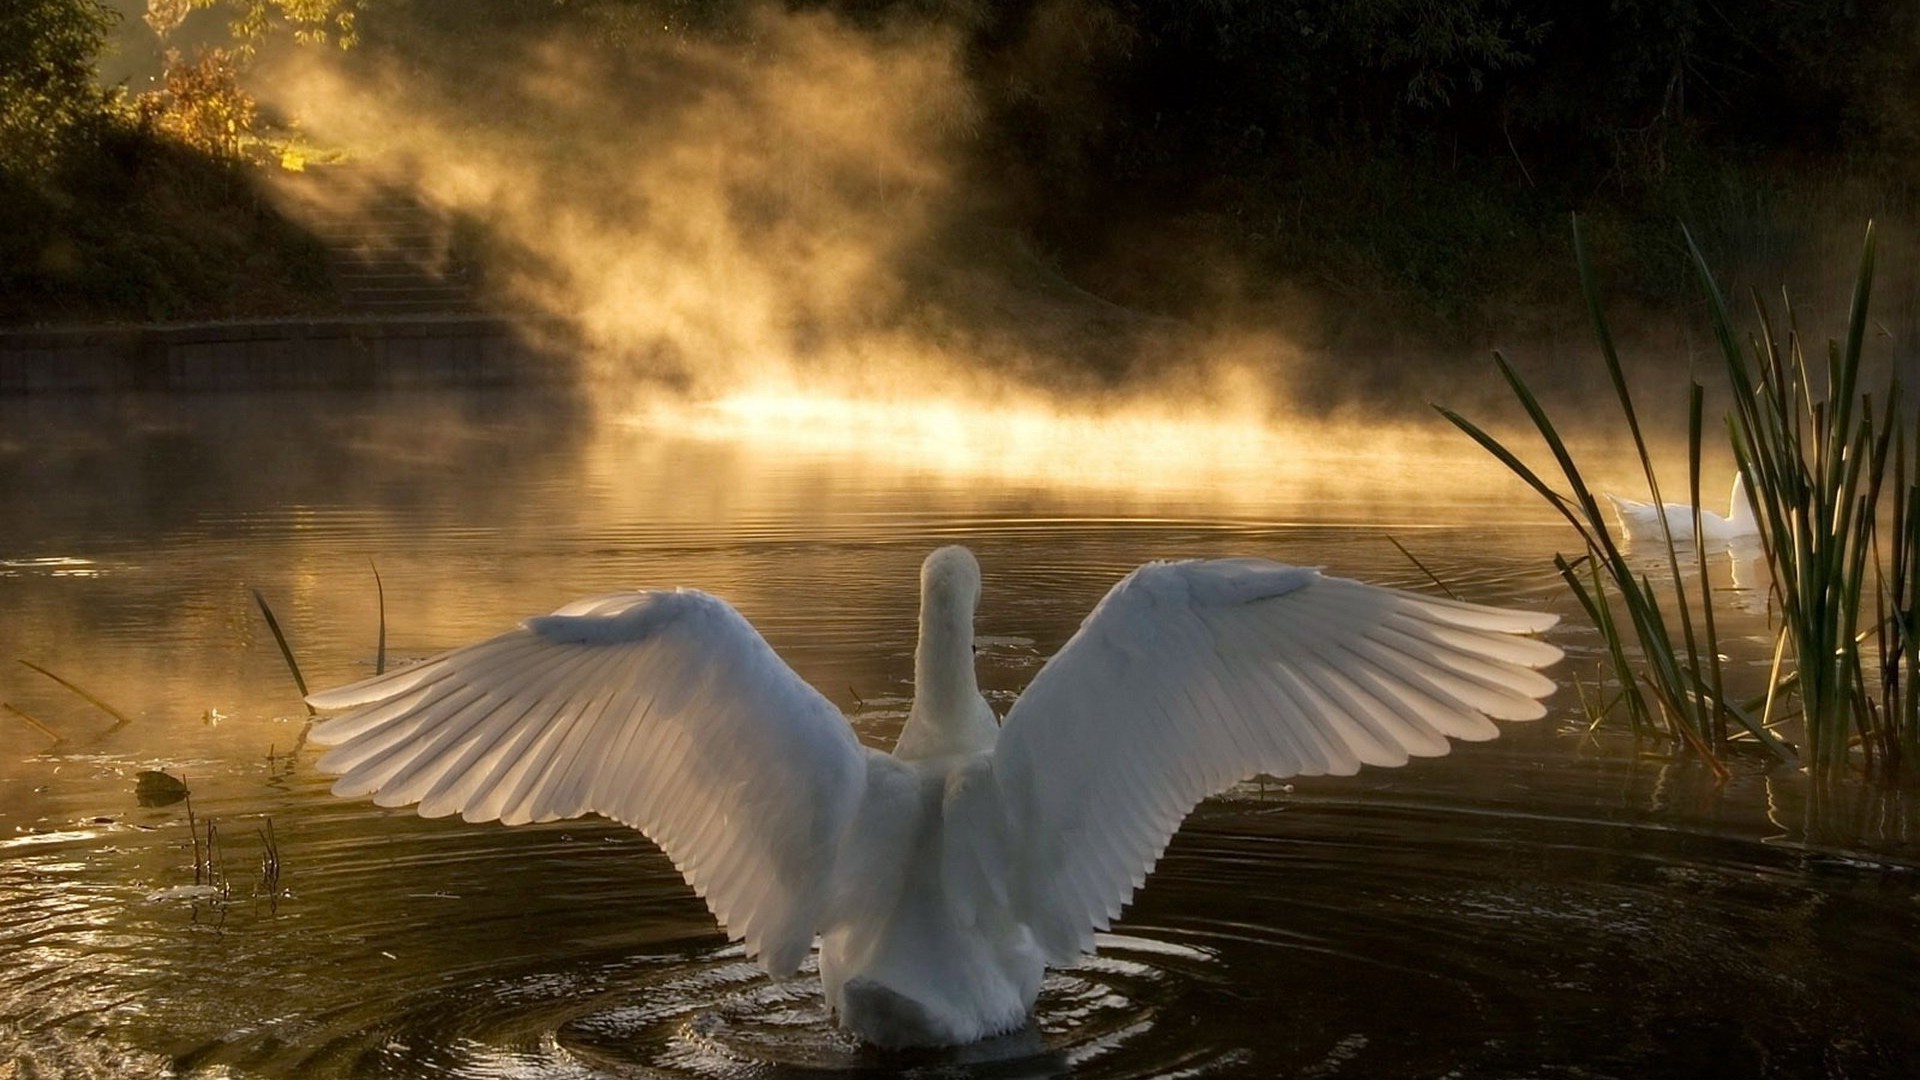 animals water bird lake river outdoors nature swan reflection wildlife seagulls dawn landscape sunset pool